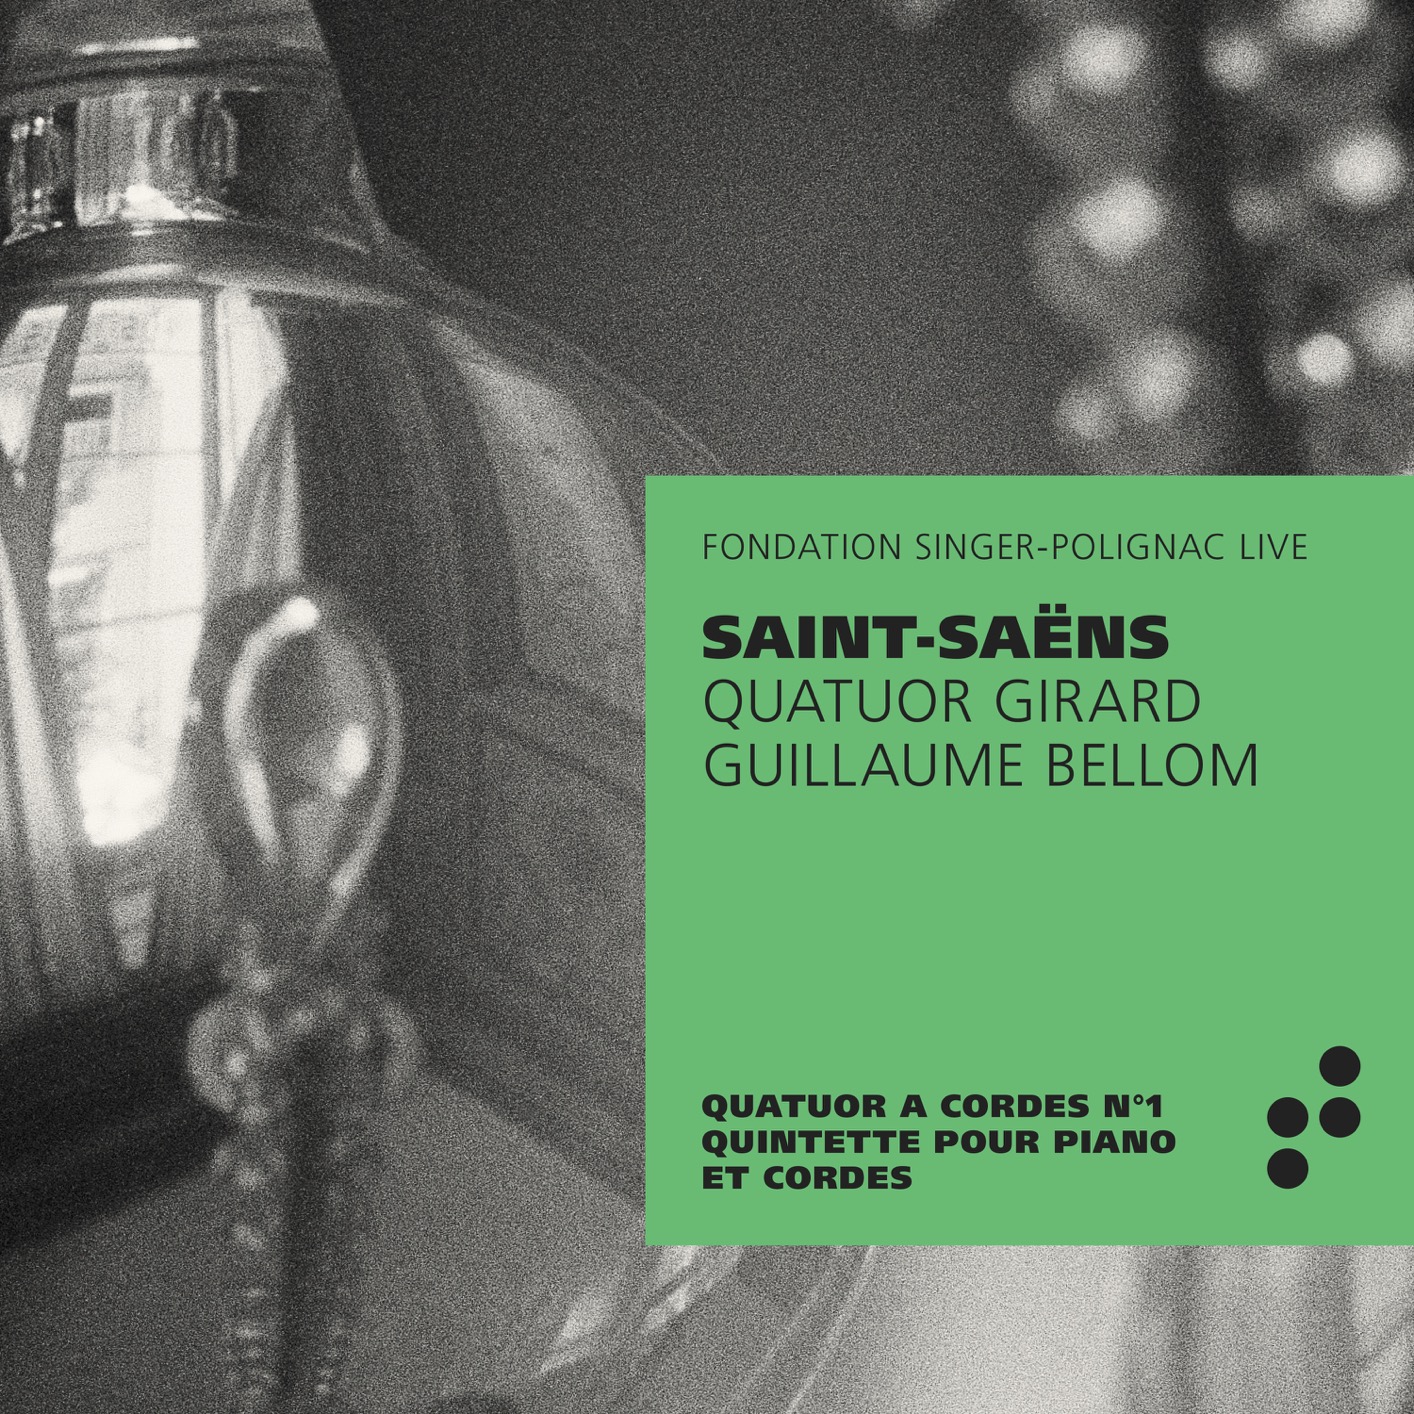 Quatuor Girard & Guillaume Bellom – Saint-Saens Quatuor A cordes No. 1 (2019) [FLAC 24bit/96kHz]